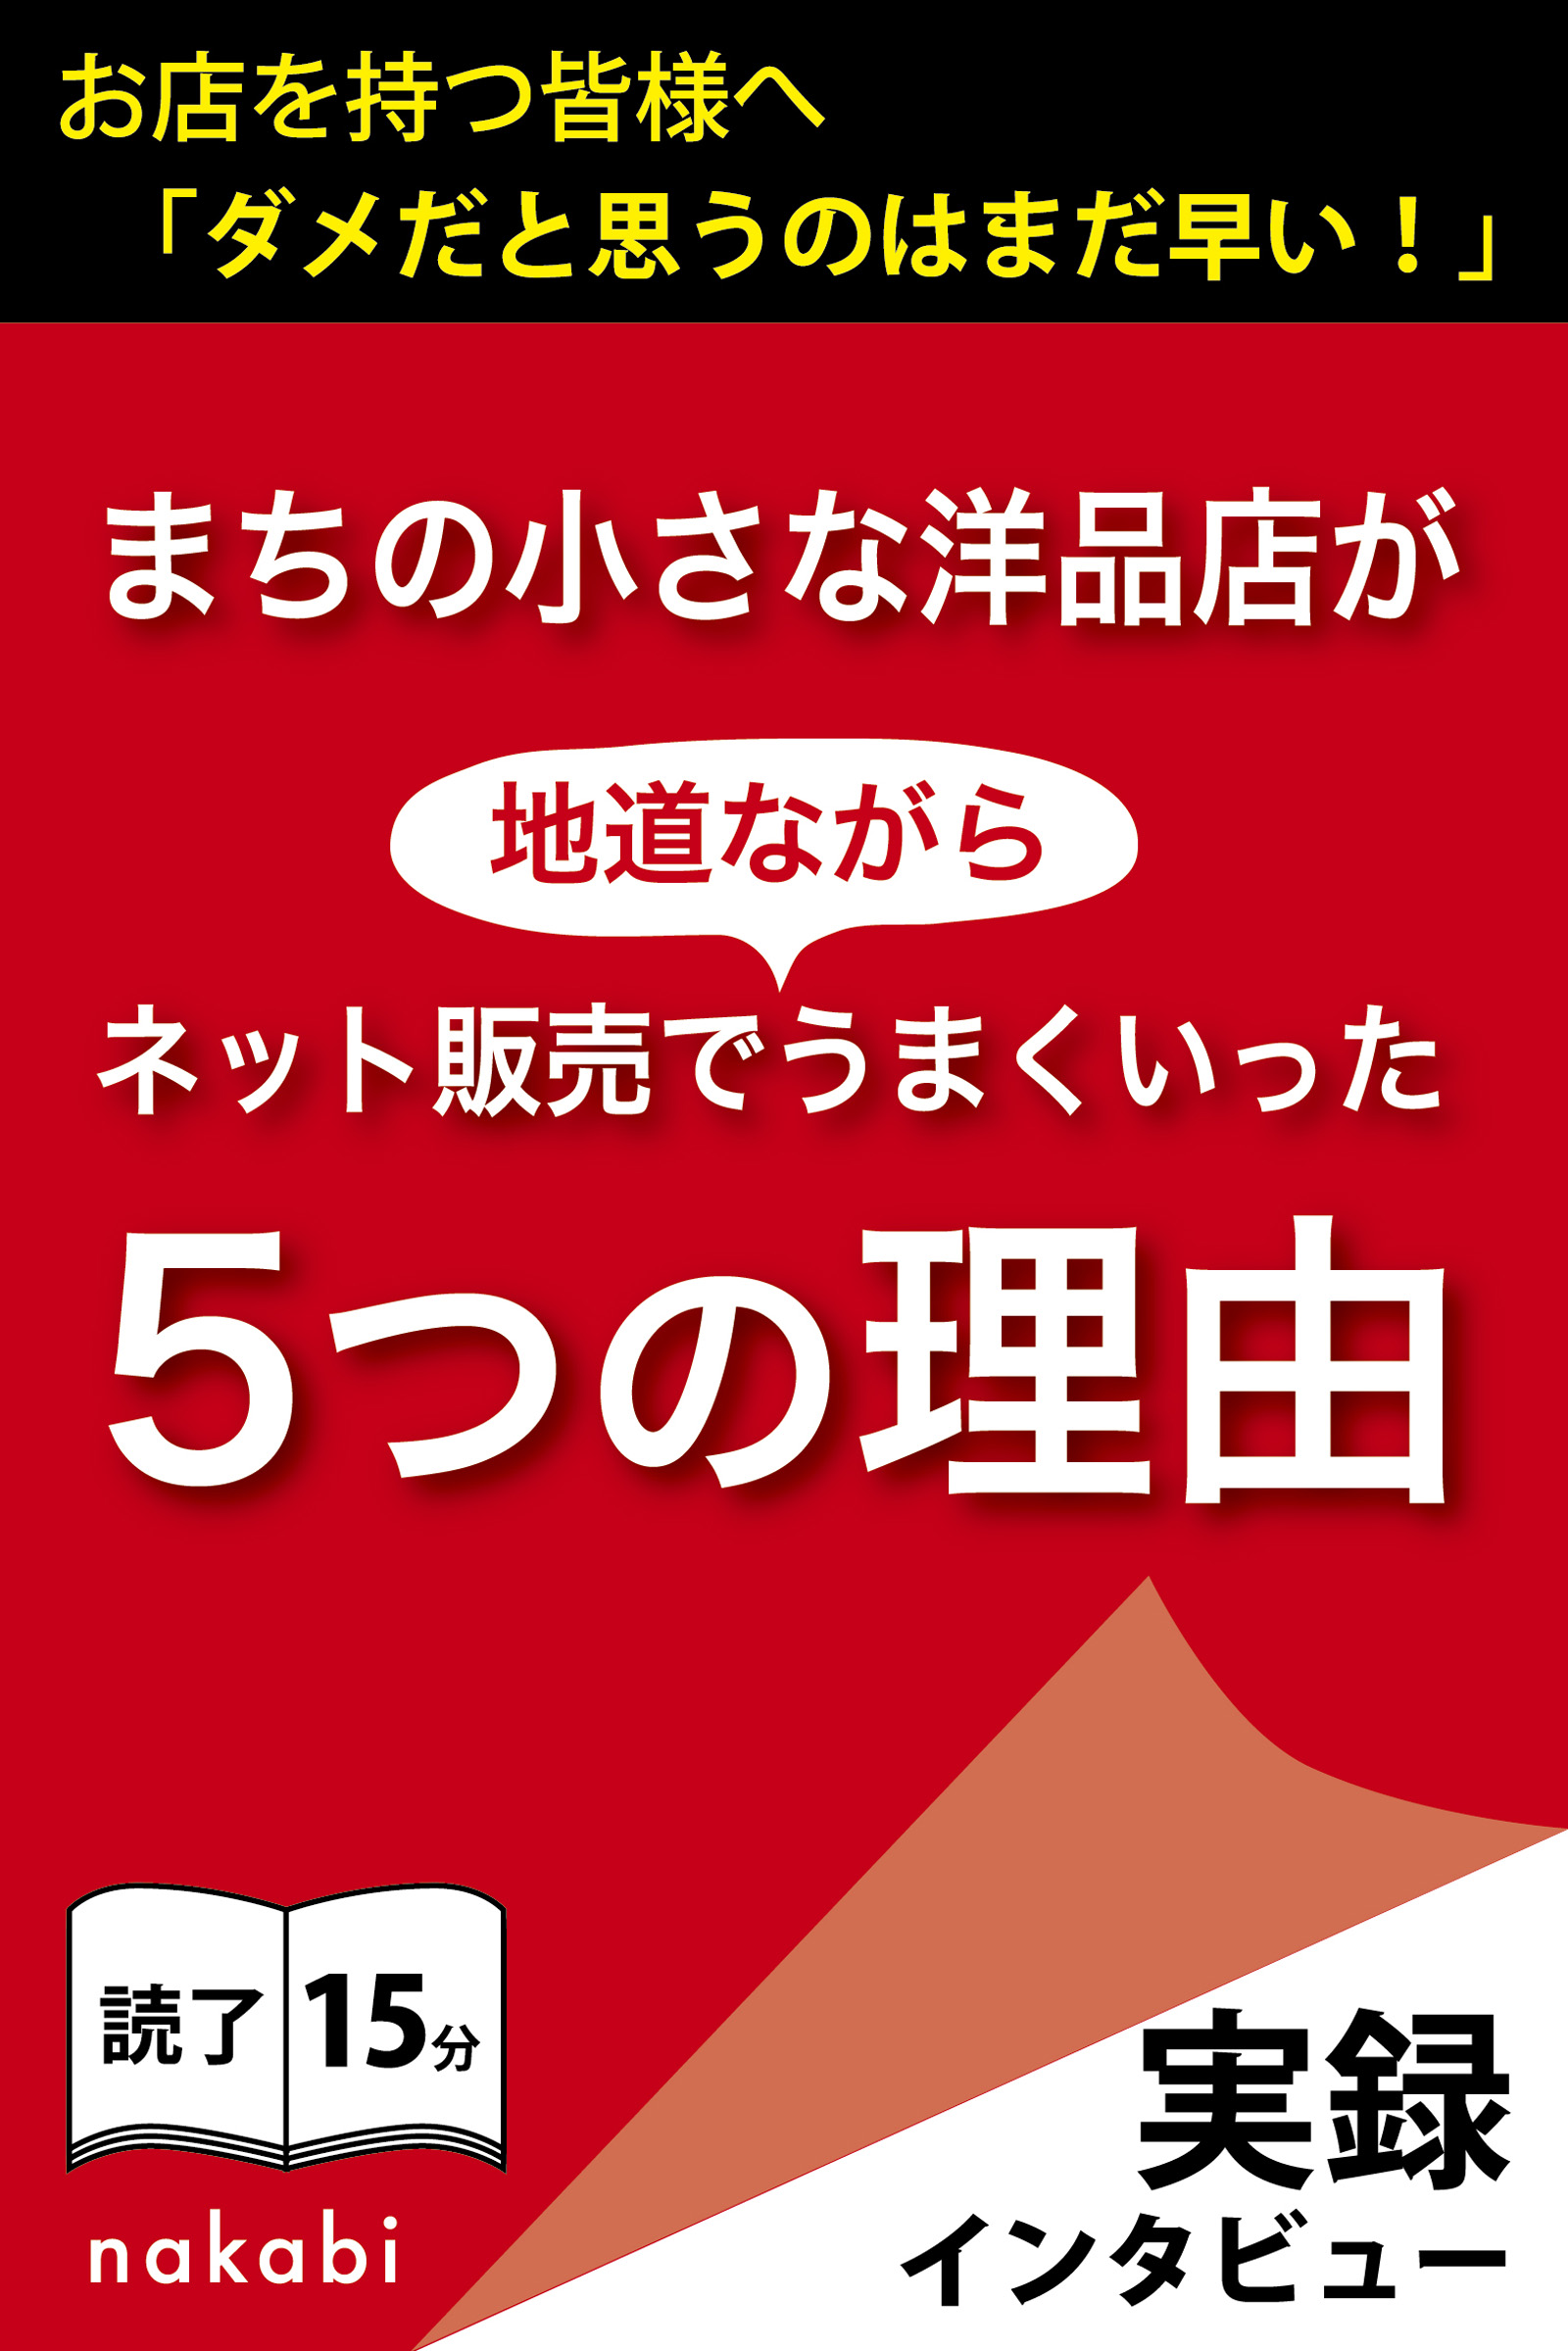 http://nakabi.jp/5%E3%81%AE%E7%90%86%E7%94%B10226.jpg